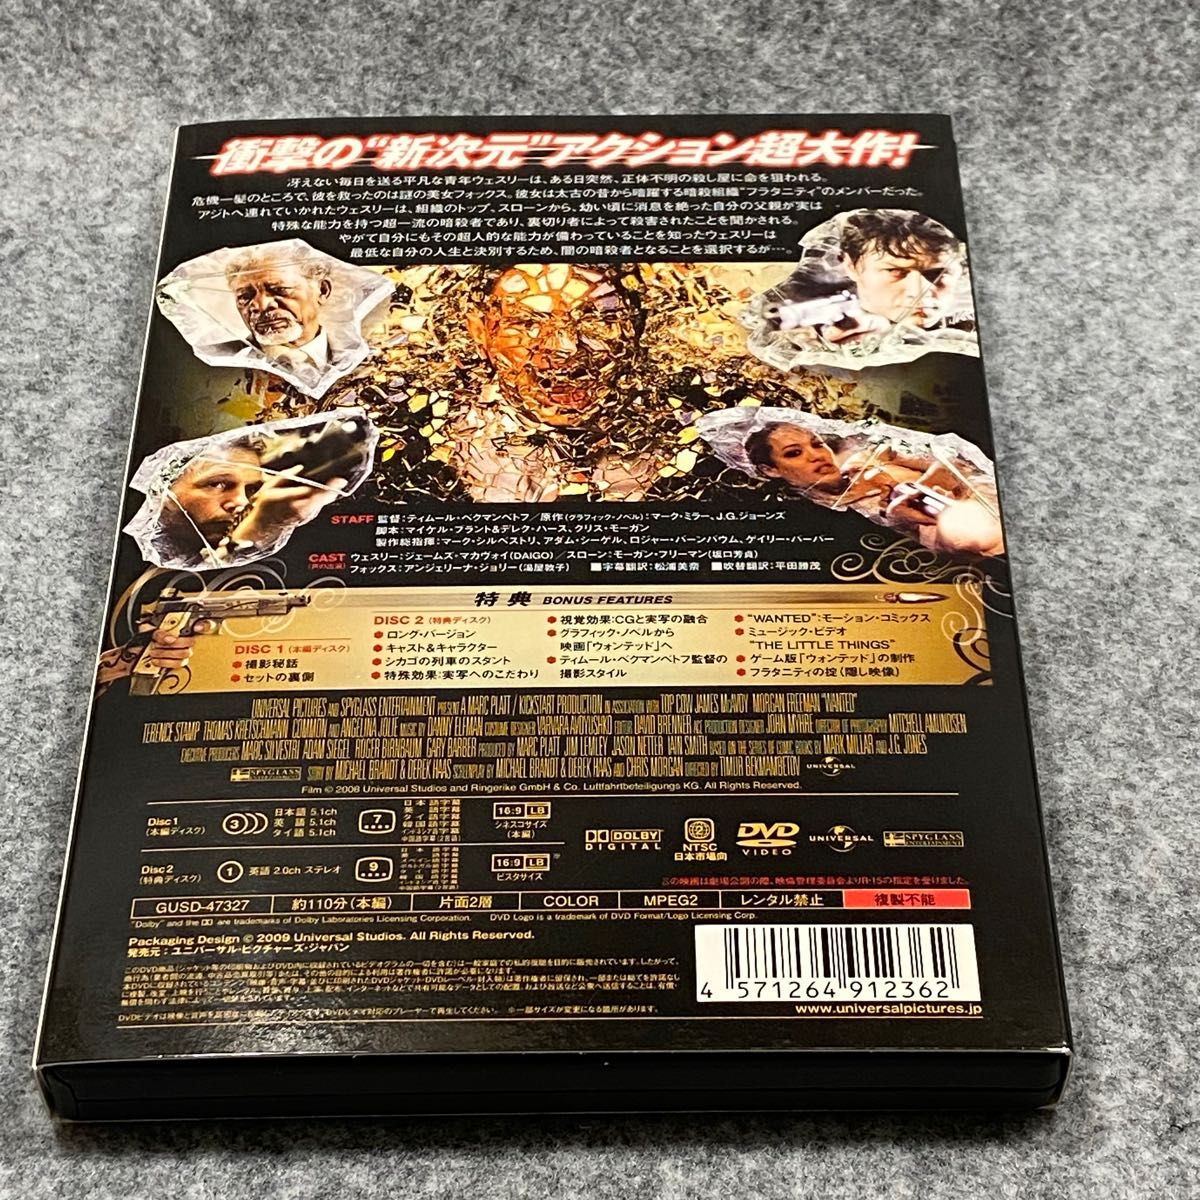 【DVD】ウォンテッド リミテッド・バージョン('08米)〈2枚組〉